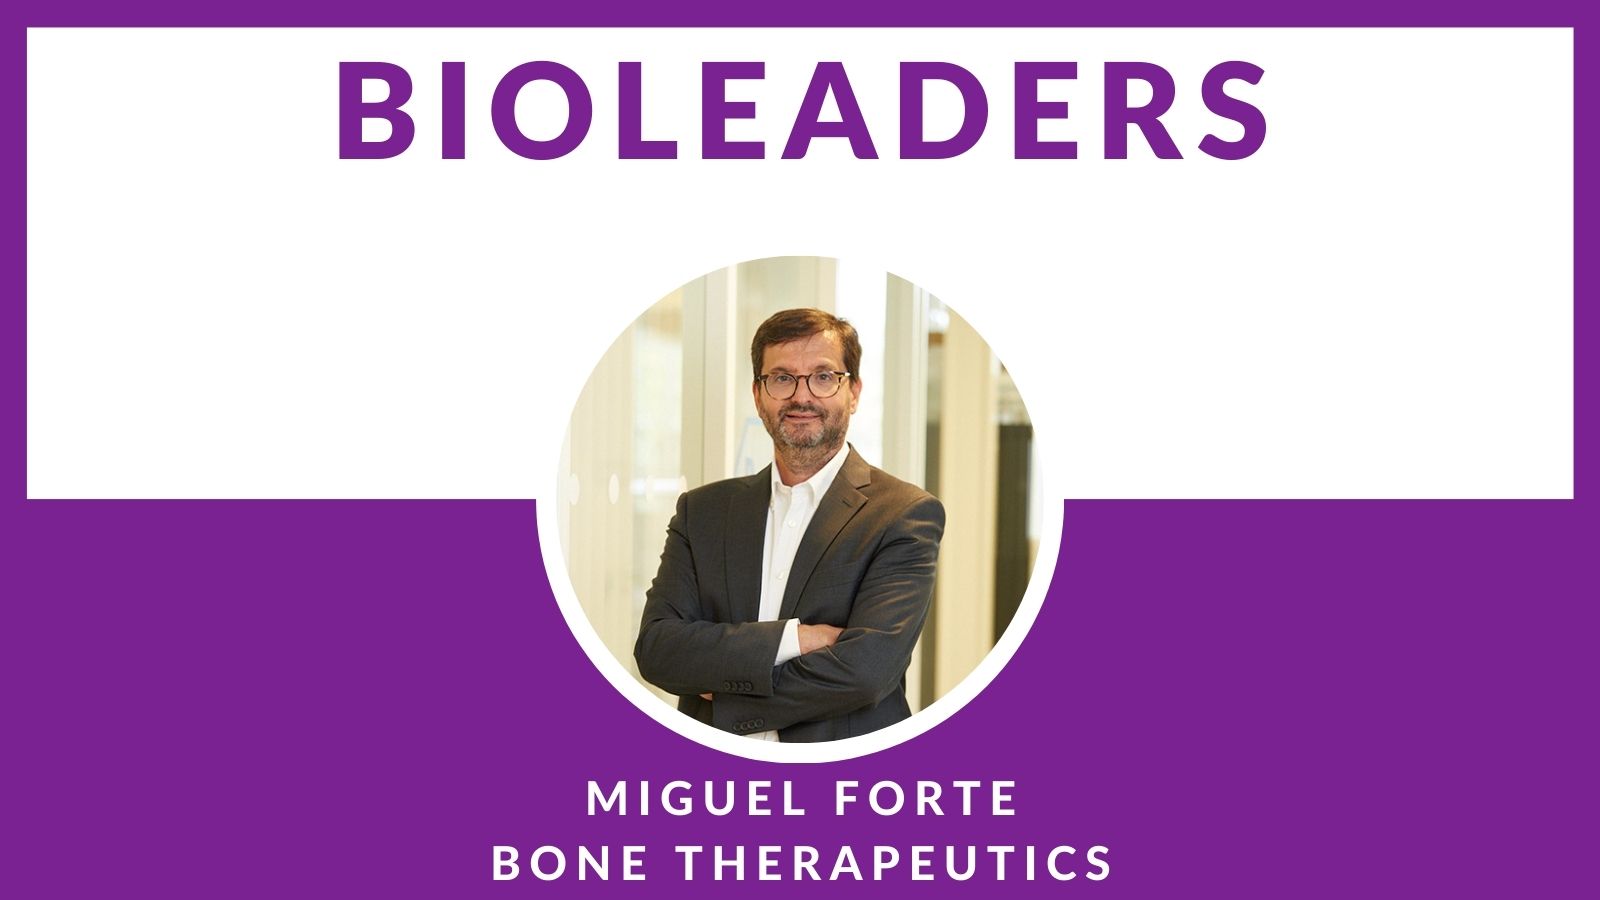 BioLeader Interviewee Miguel Forte